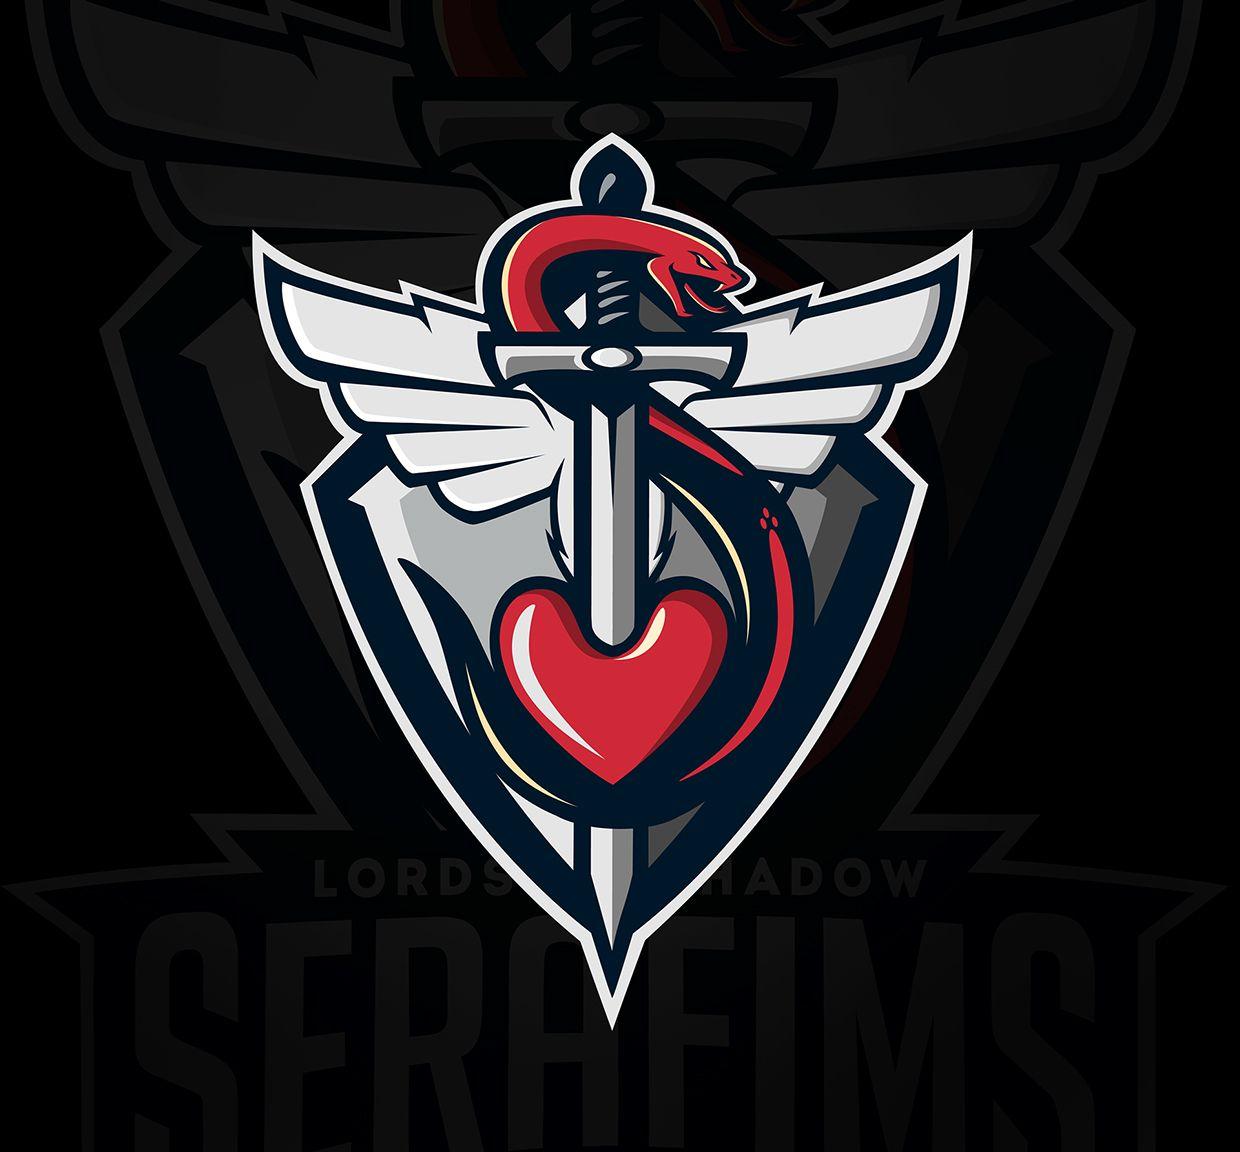 Lord Logo - LORDS OF SHADOWS SERAFIMS DOTA TEAM LOGO on Behance | American Logo ...